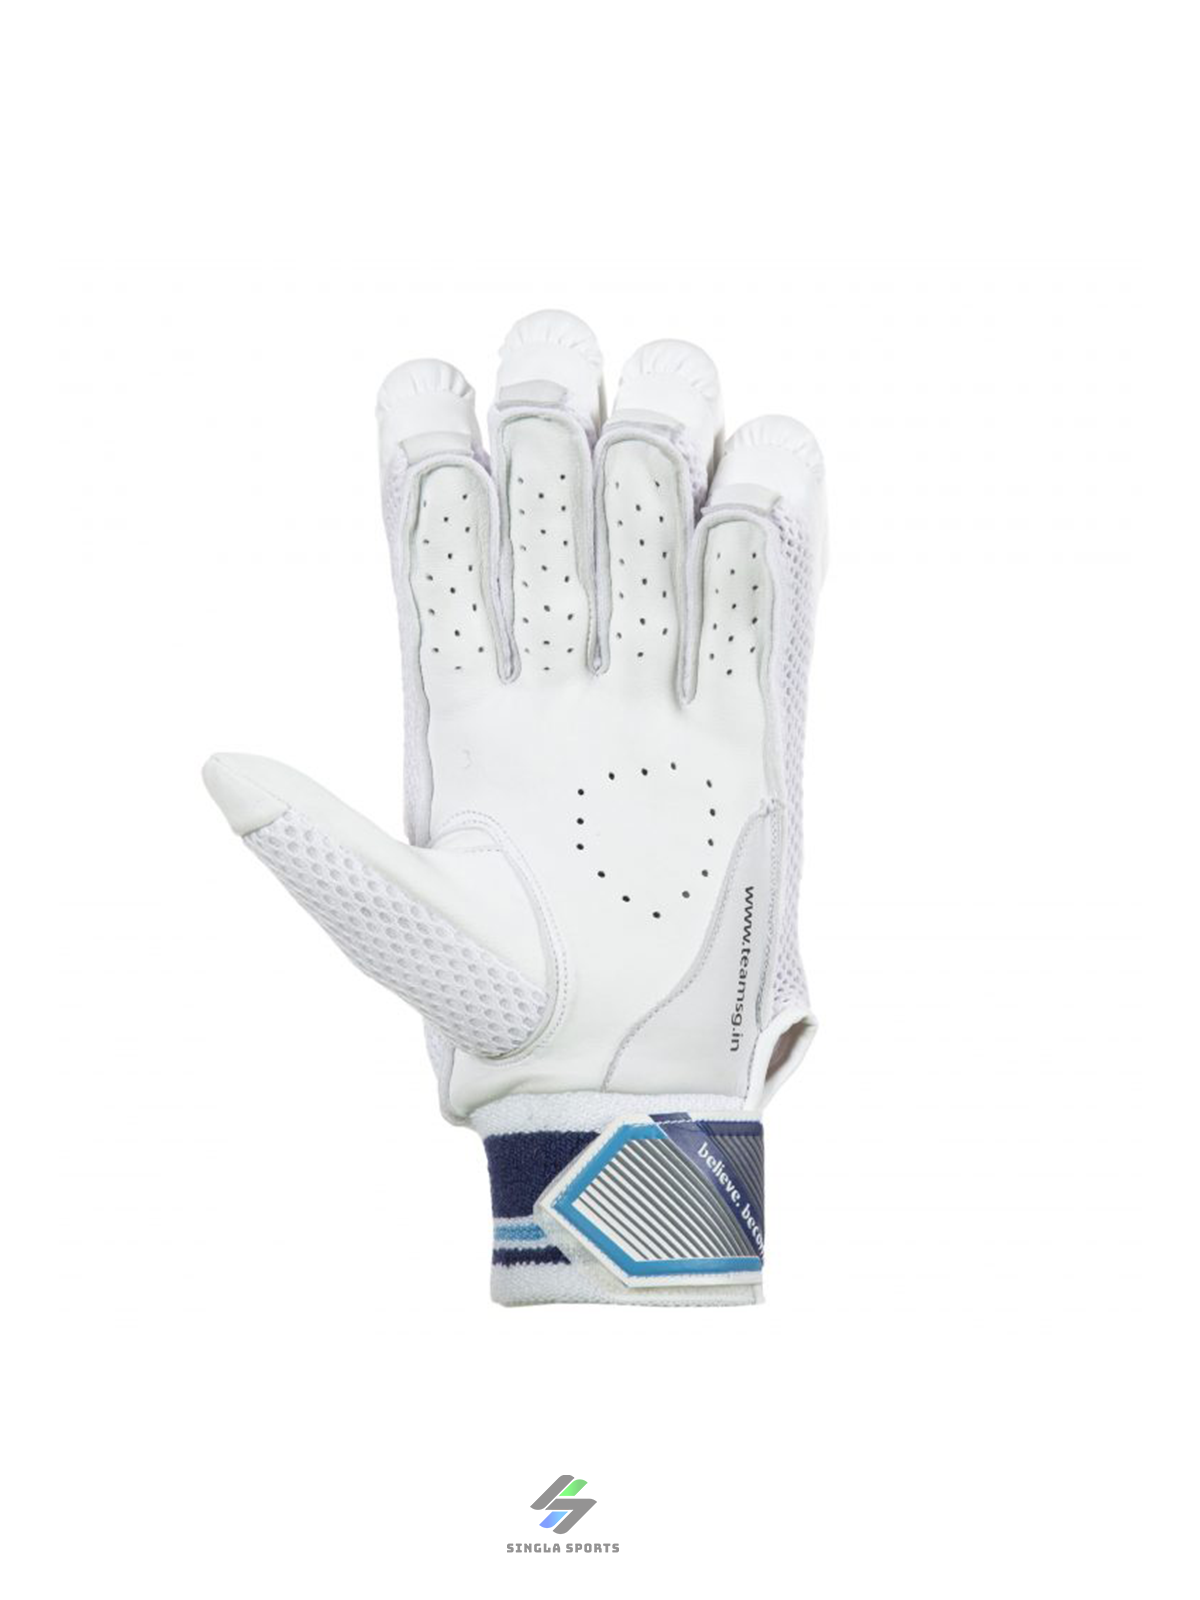 SG RP Lite Batting Gloves – Rishabh Pant Gloves